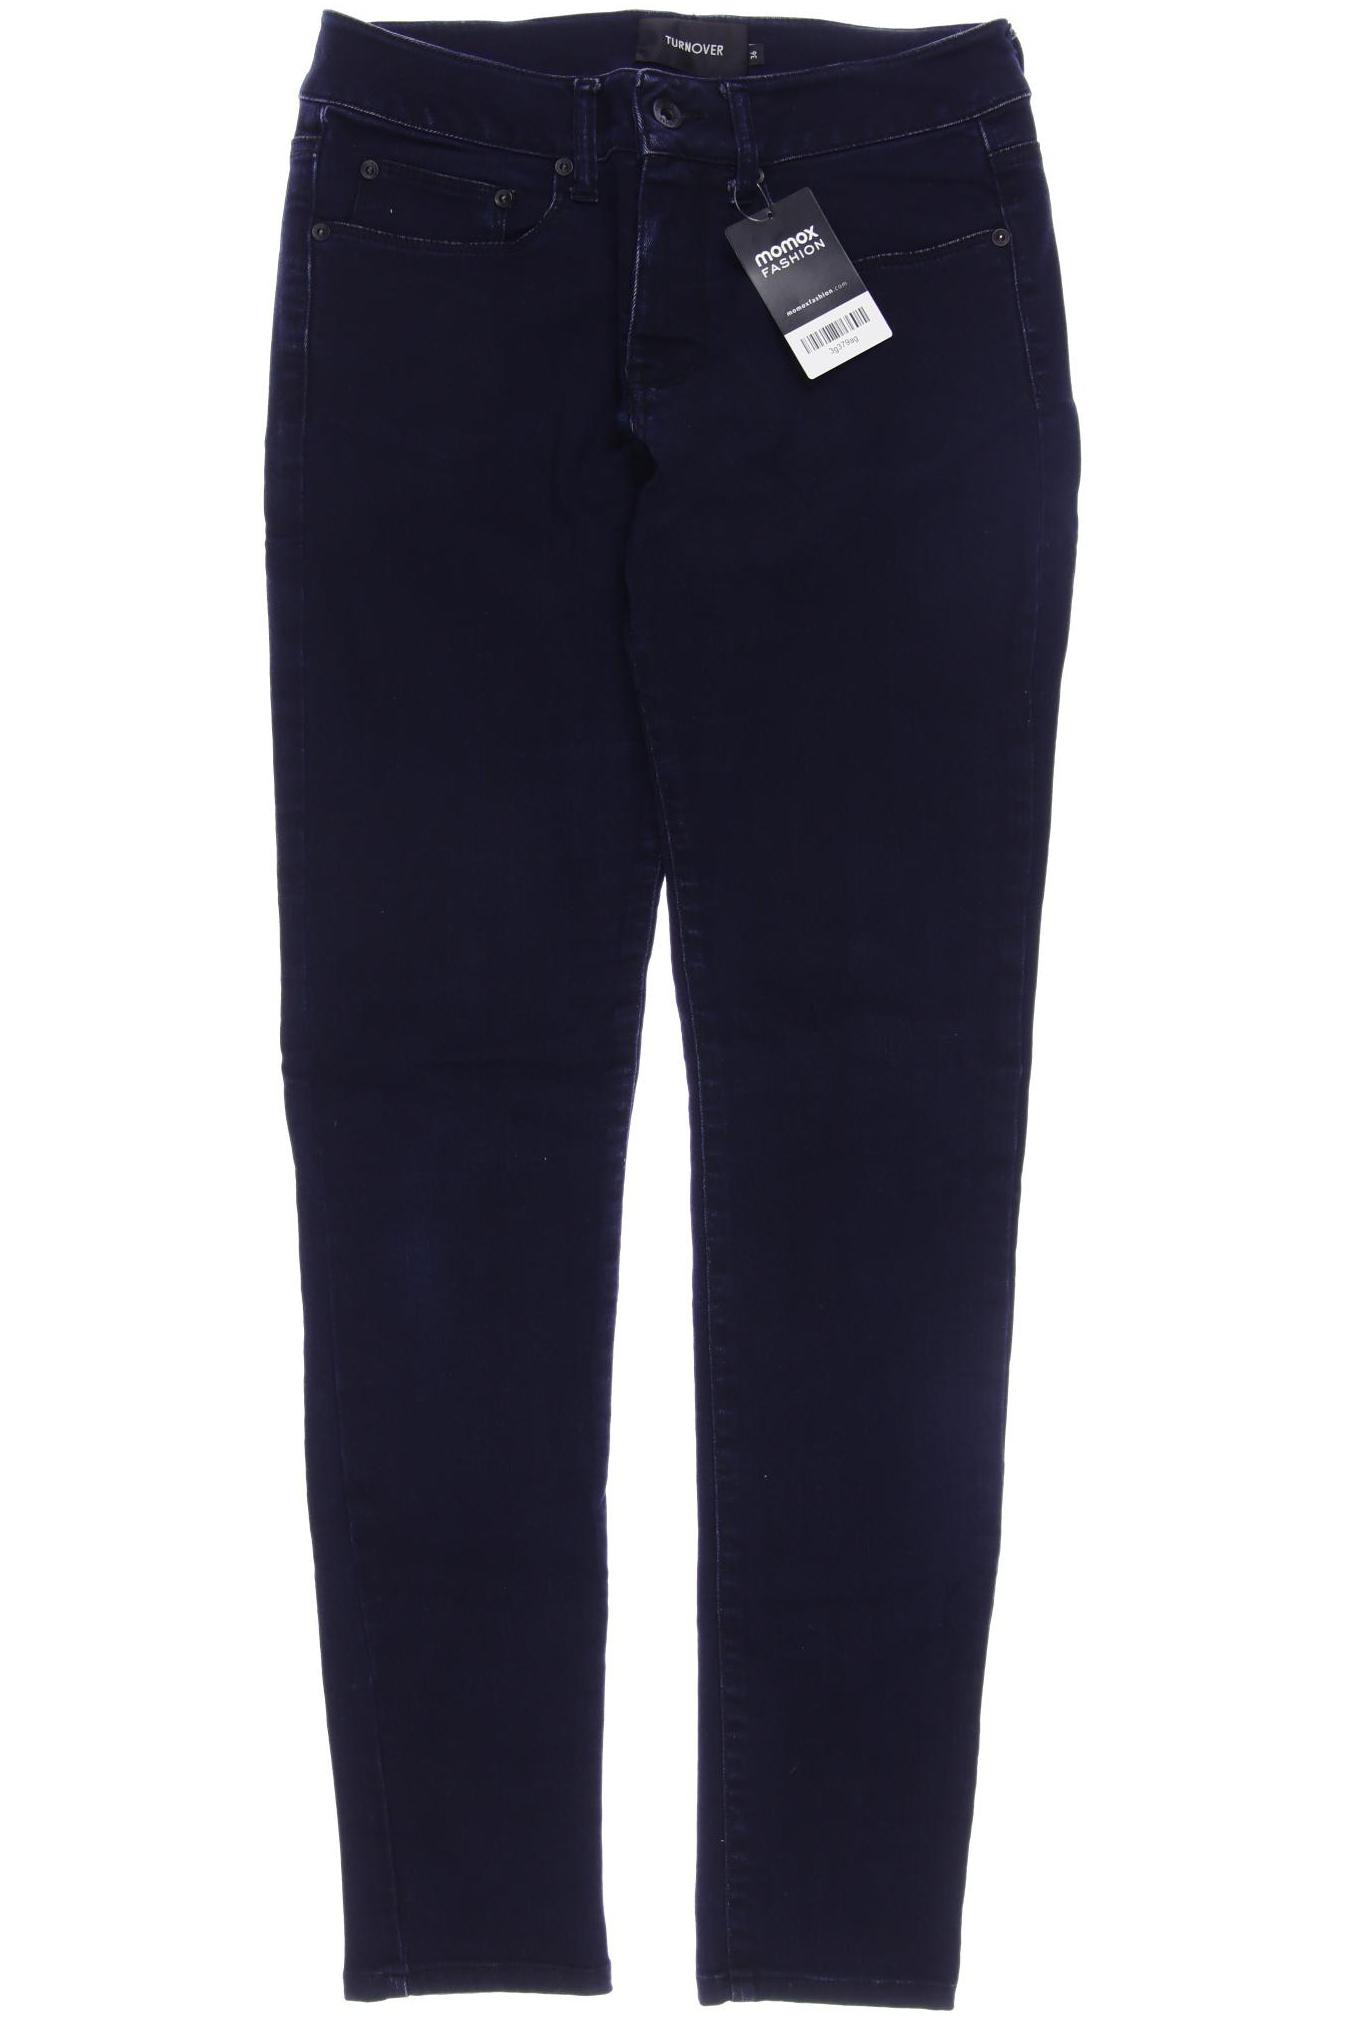 TURNOVER Damen Jeans, marineblau von TURNOVER